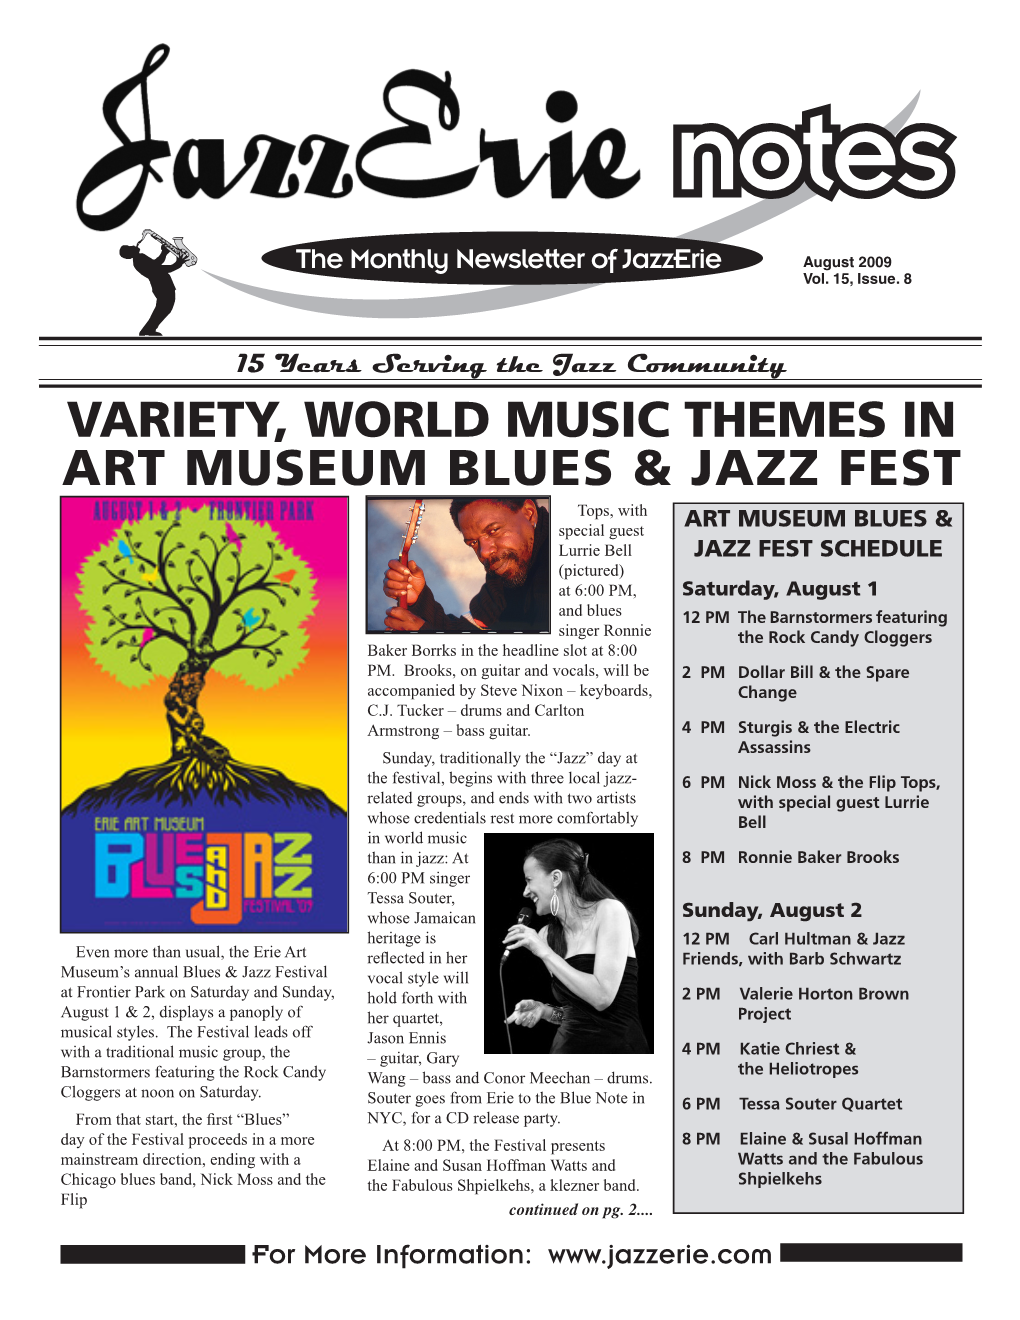 Variety, World Music Themes in Art Museum Blues & Jazz